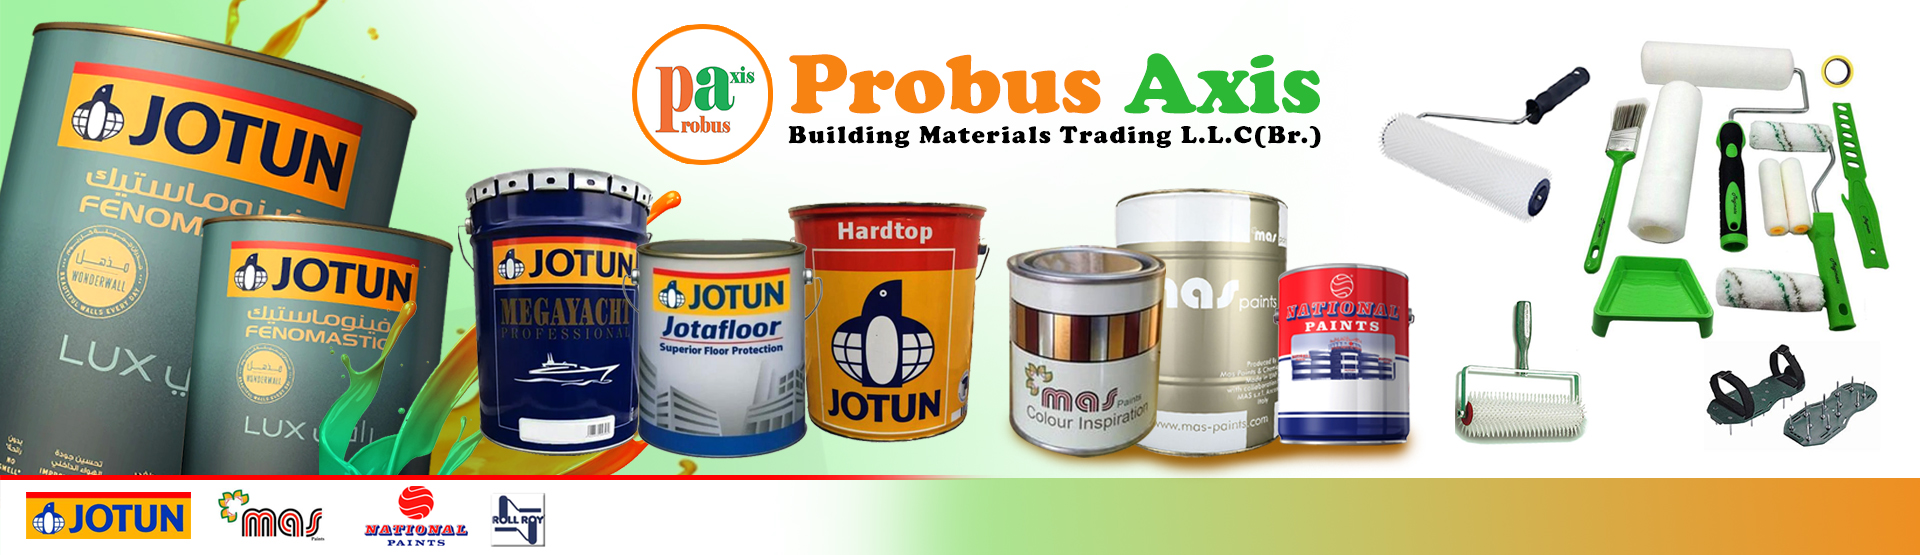 PROBUS AXIS BUILDING MATERIALS TRADING LLC (Br.)